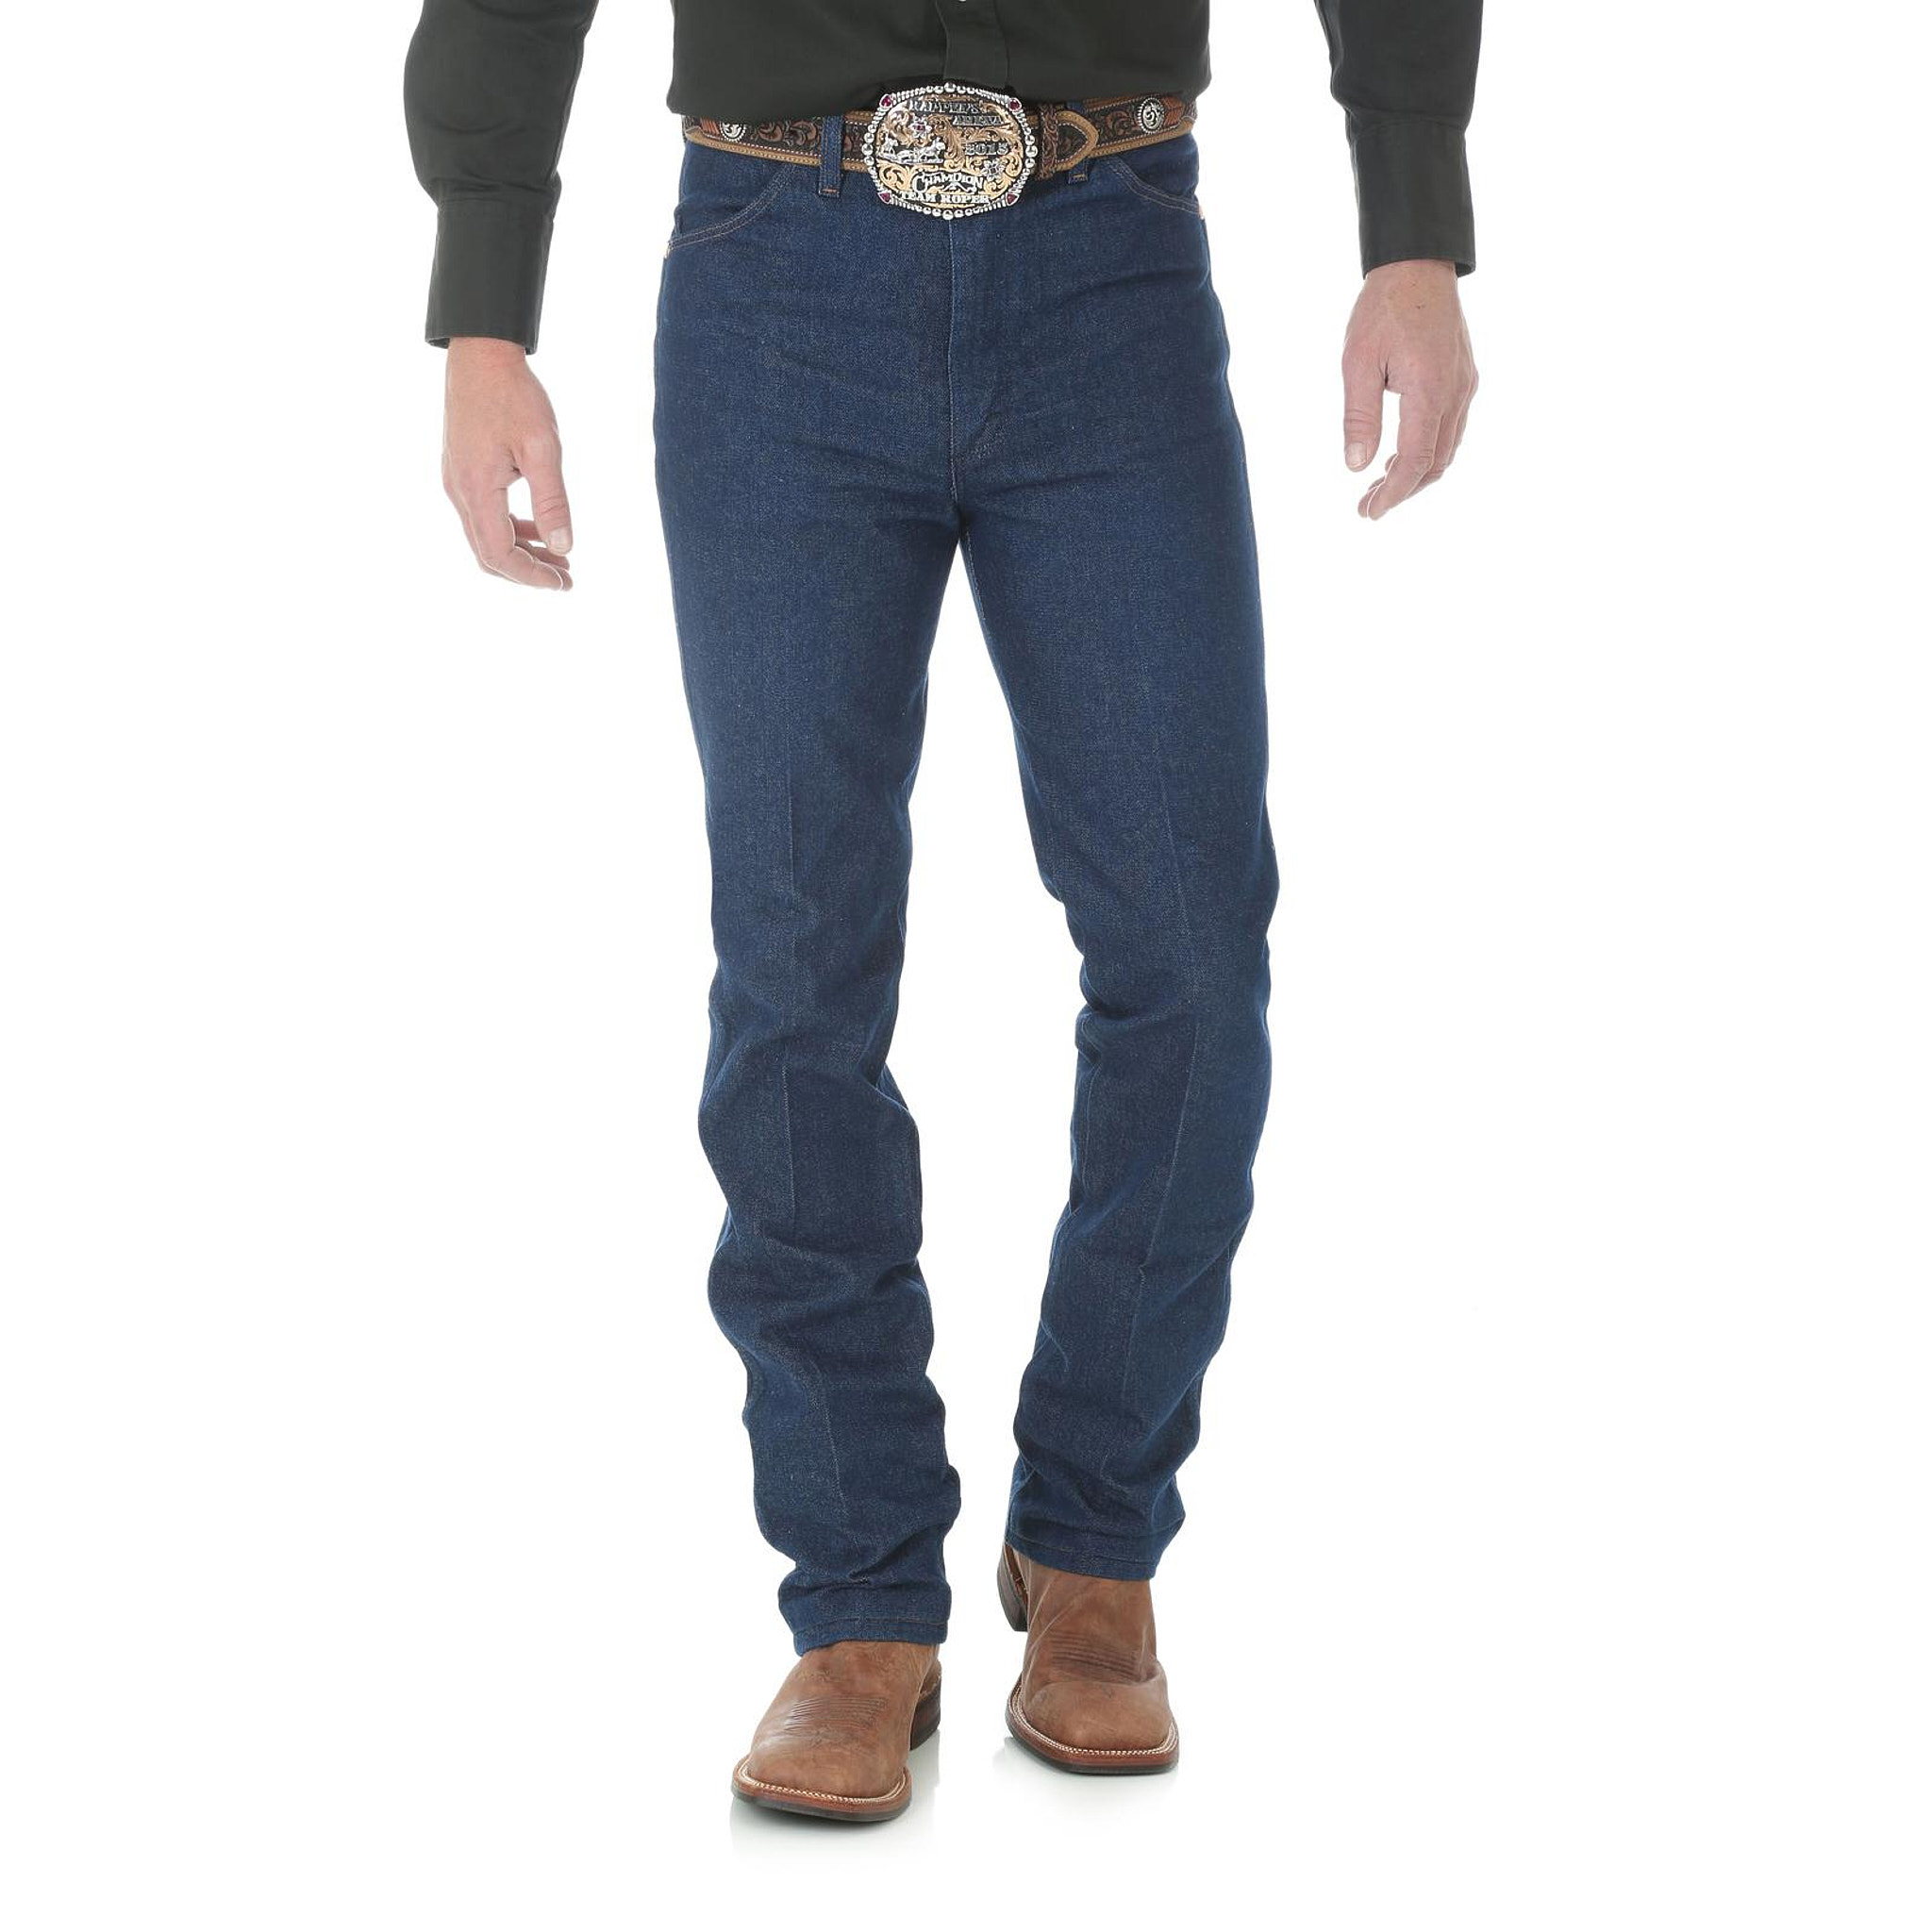 Wrangler Apparel Mens Slim Fit Cowboy Cut Jeans - image 3 of 3